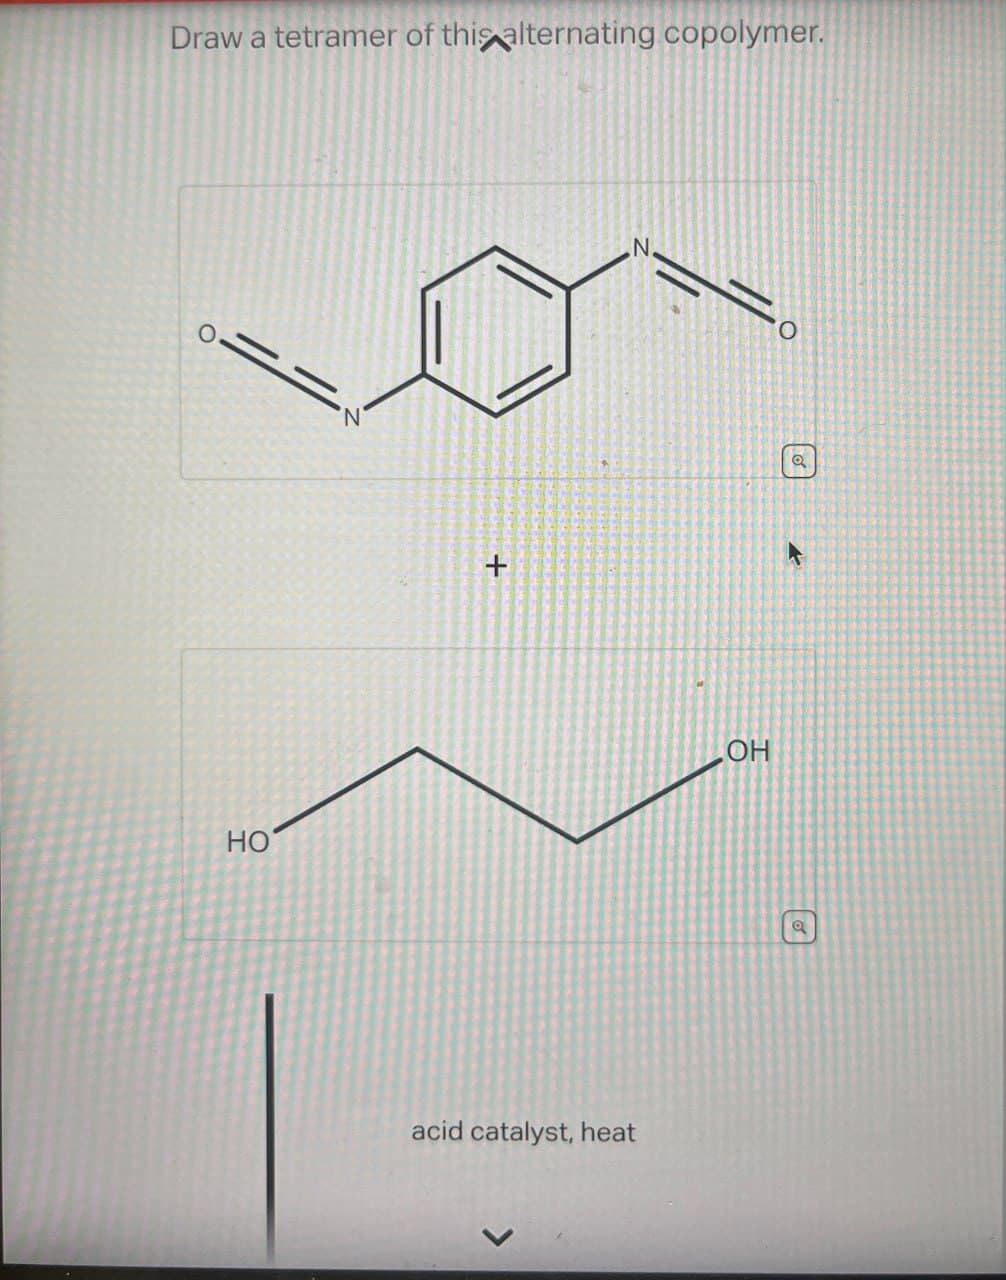 Draw a tetramer of this alternating copolymer.
HO
+
N
O
acid catalyst, heat
OH